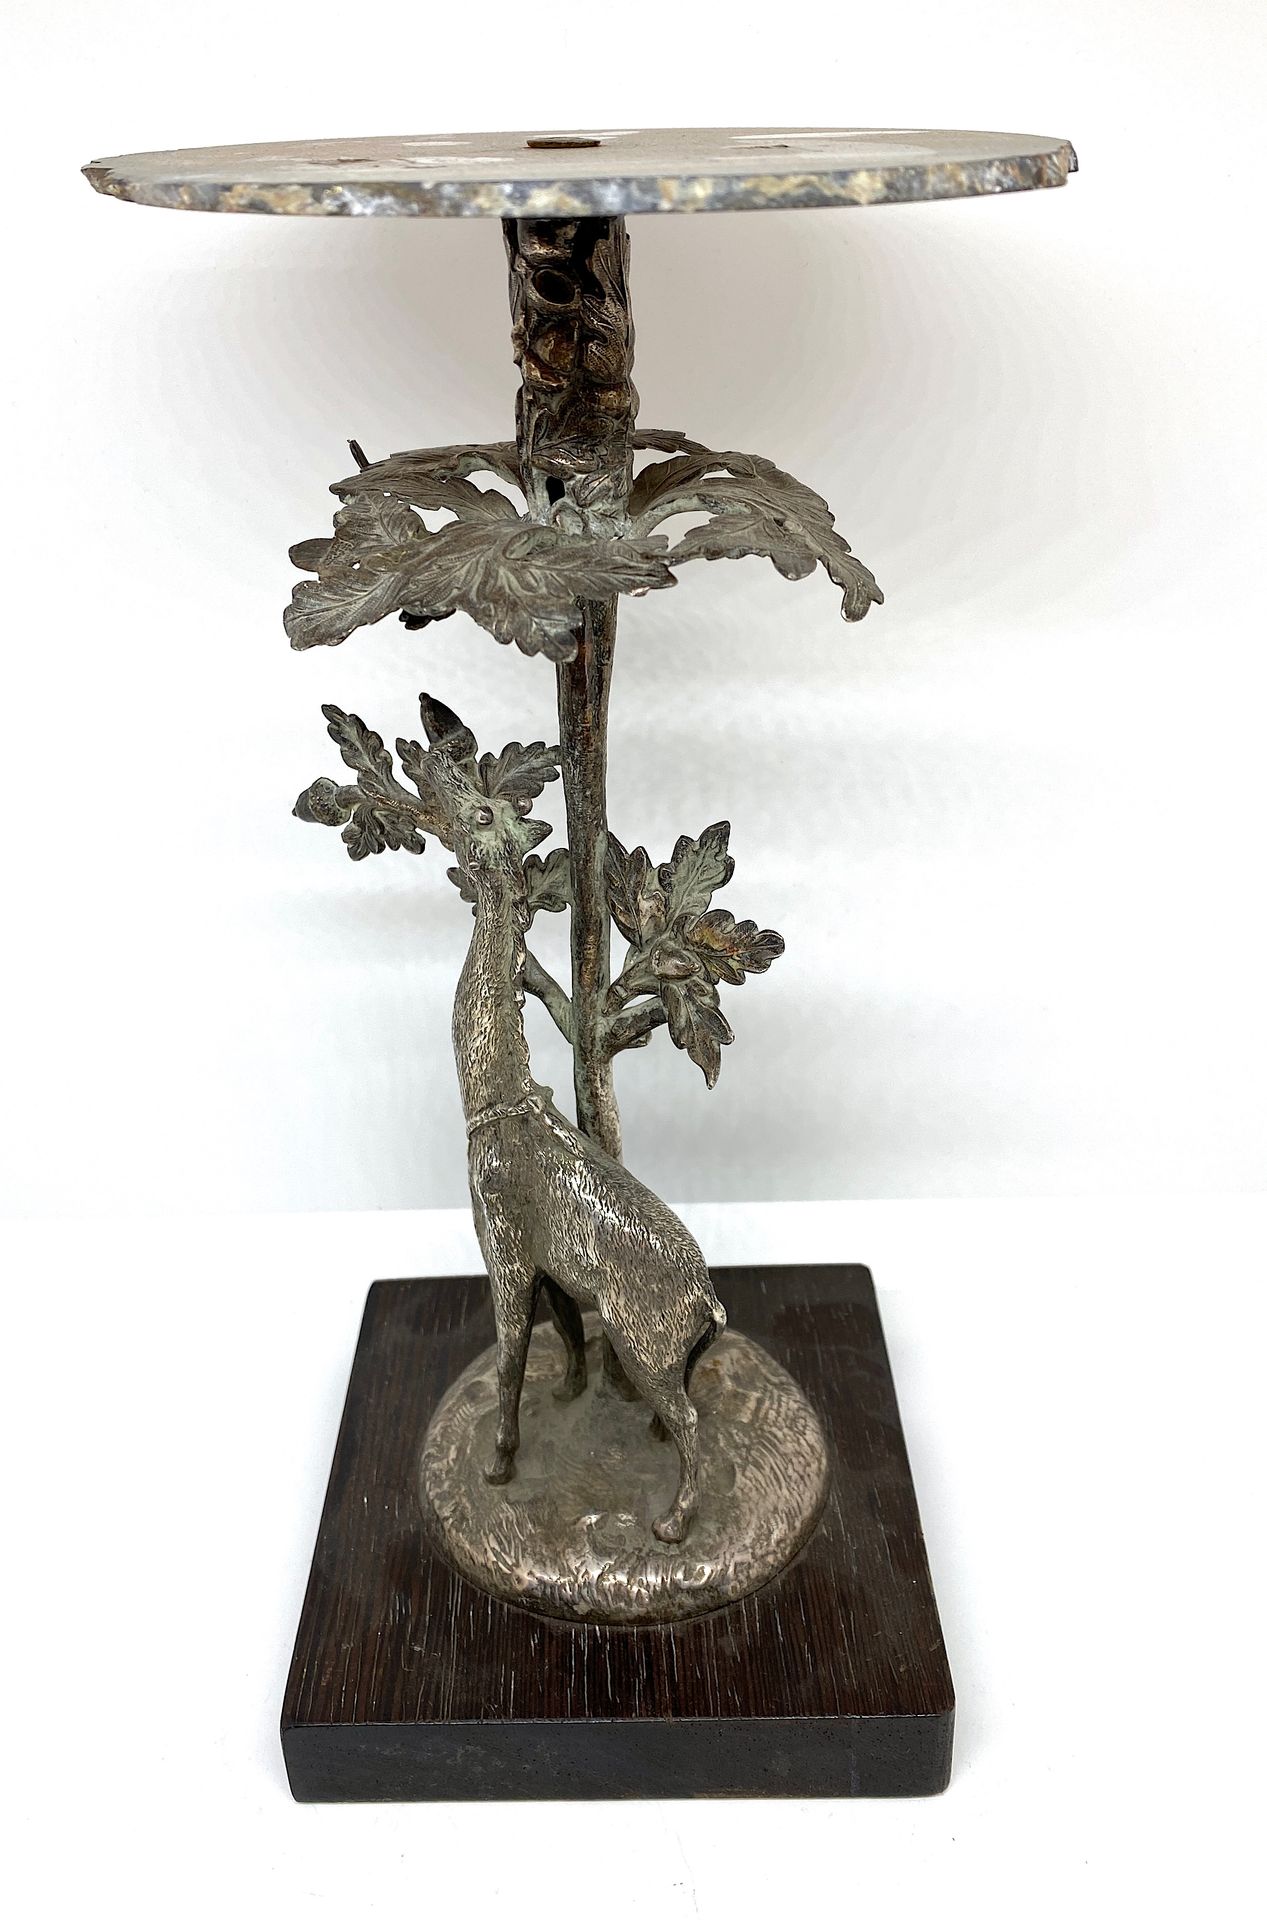 Null 一个镀银的青铜展示品，展示了一个以玛瑙托盘为顶的腰带，放在一个方形的木质底座上。

高：28.5厘米